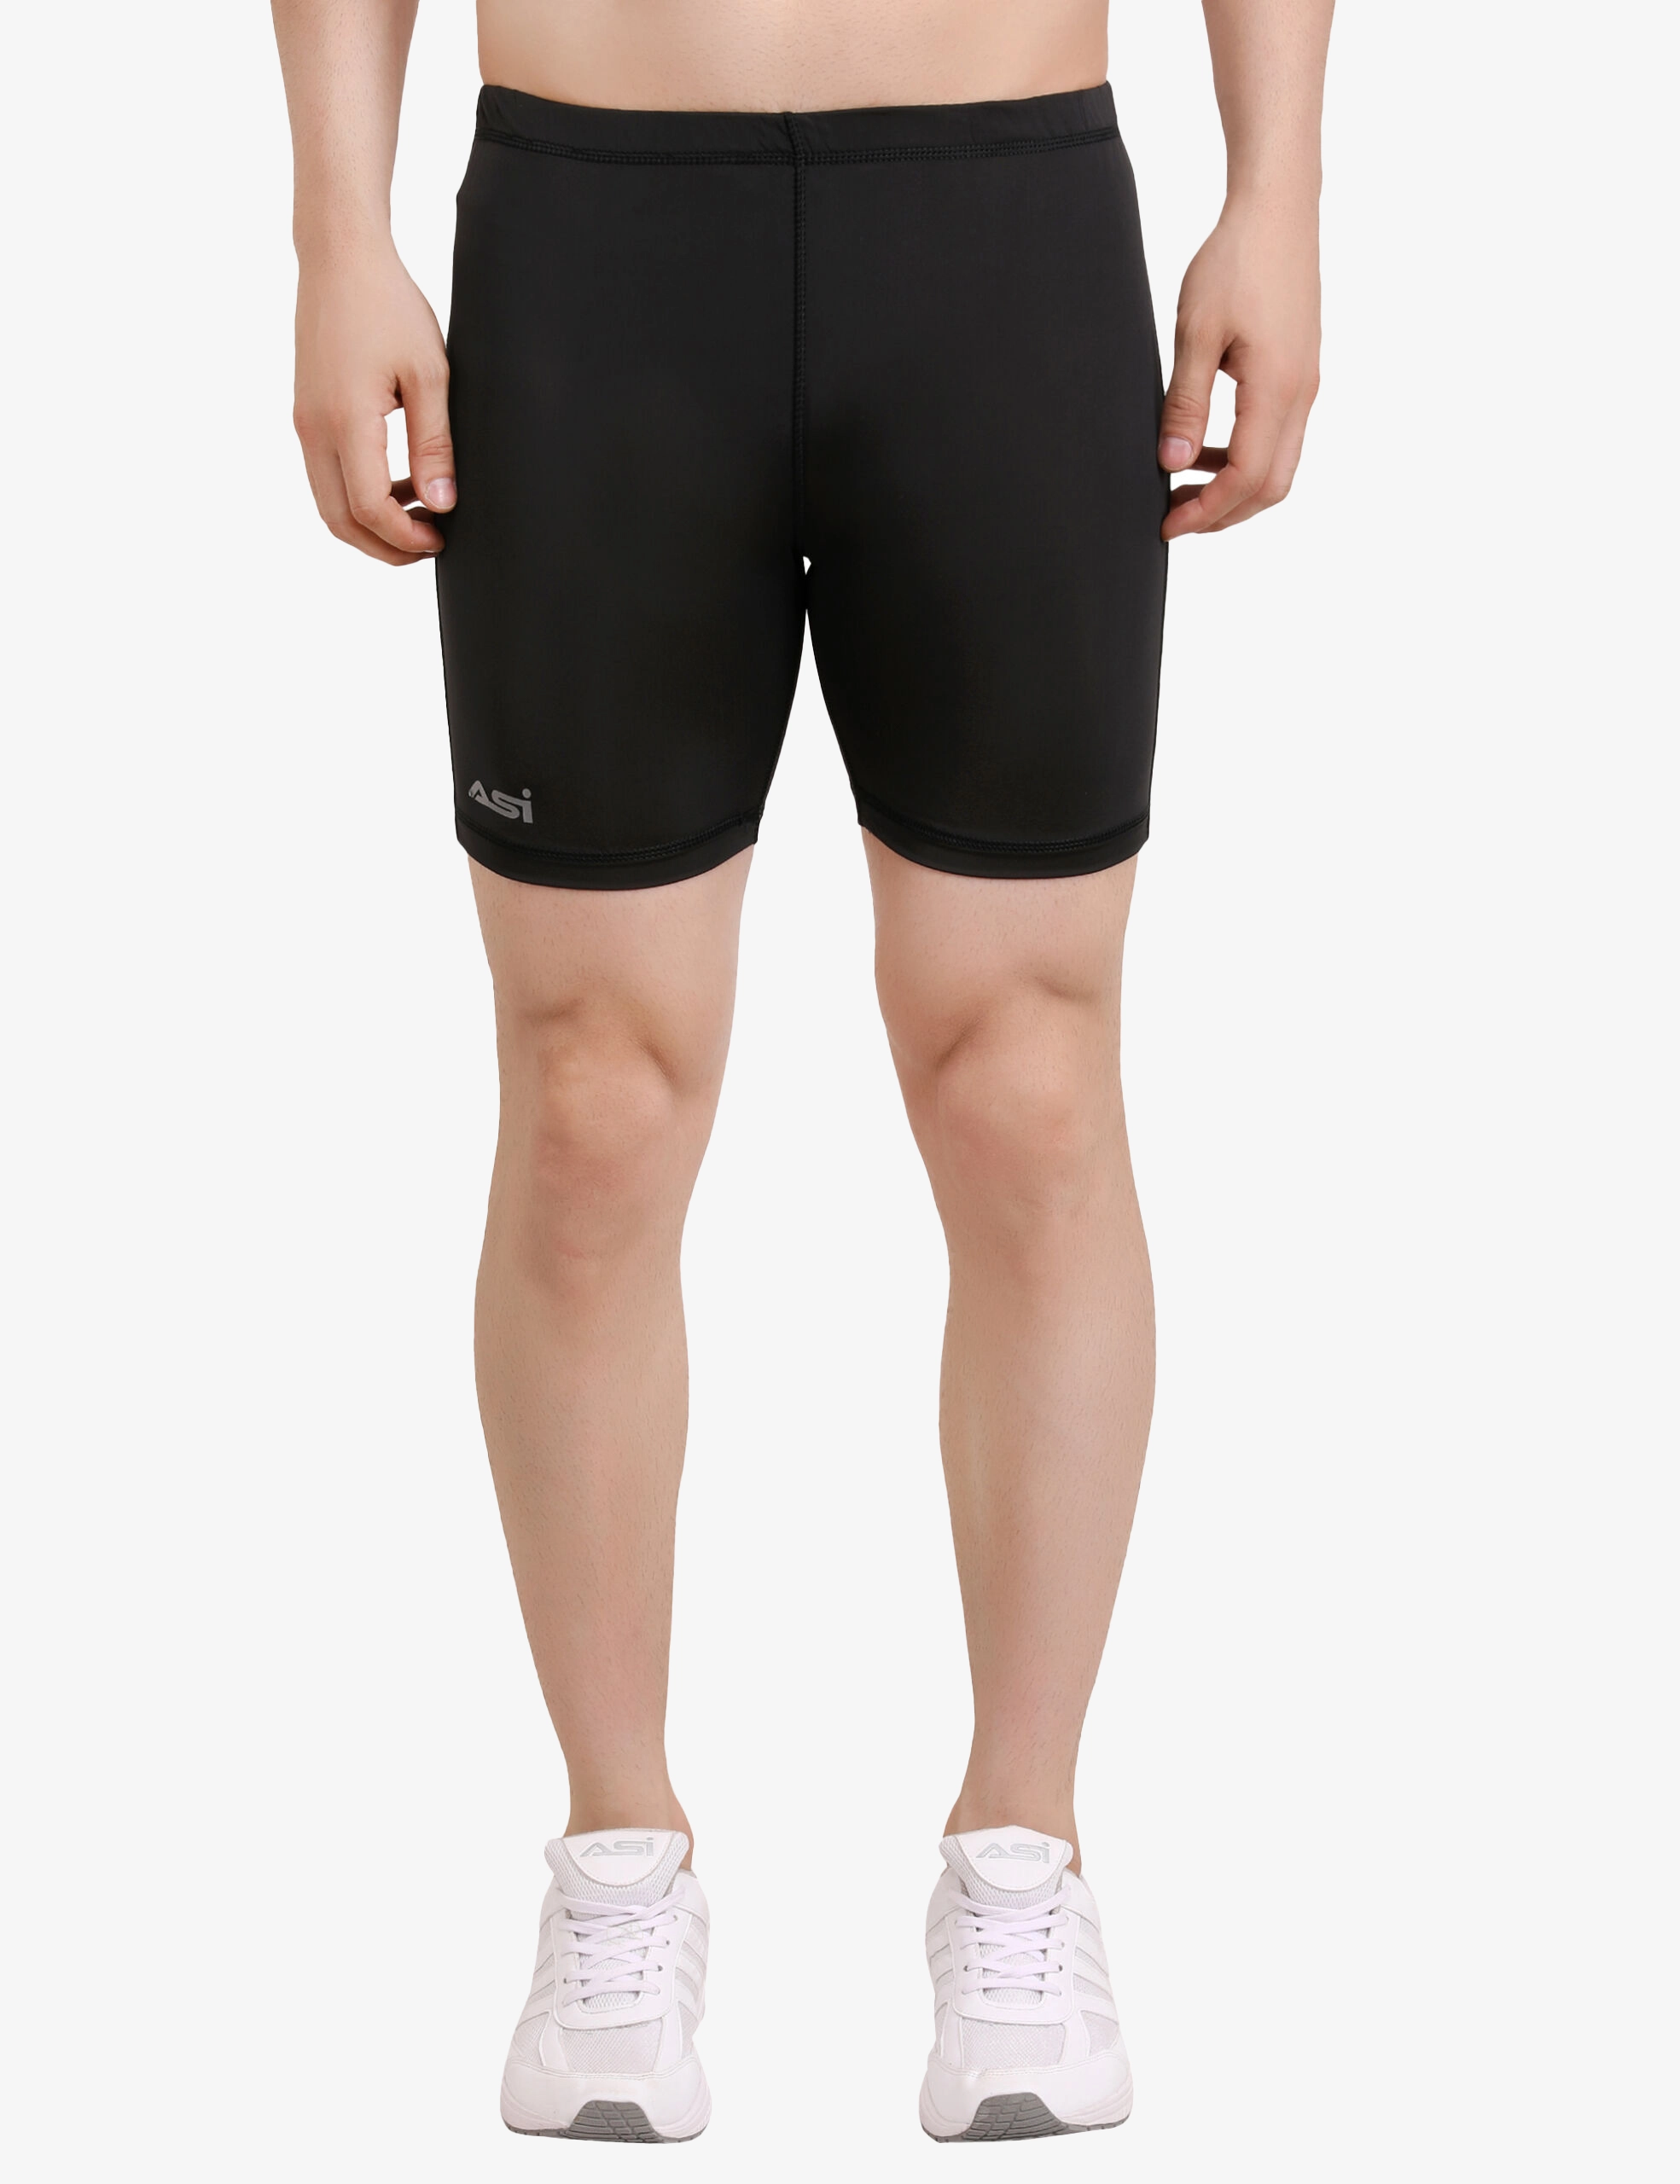 ASI Comp Wear Shorts for Men